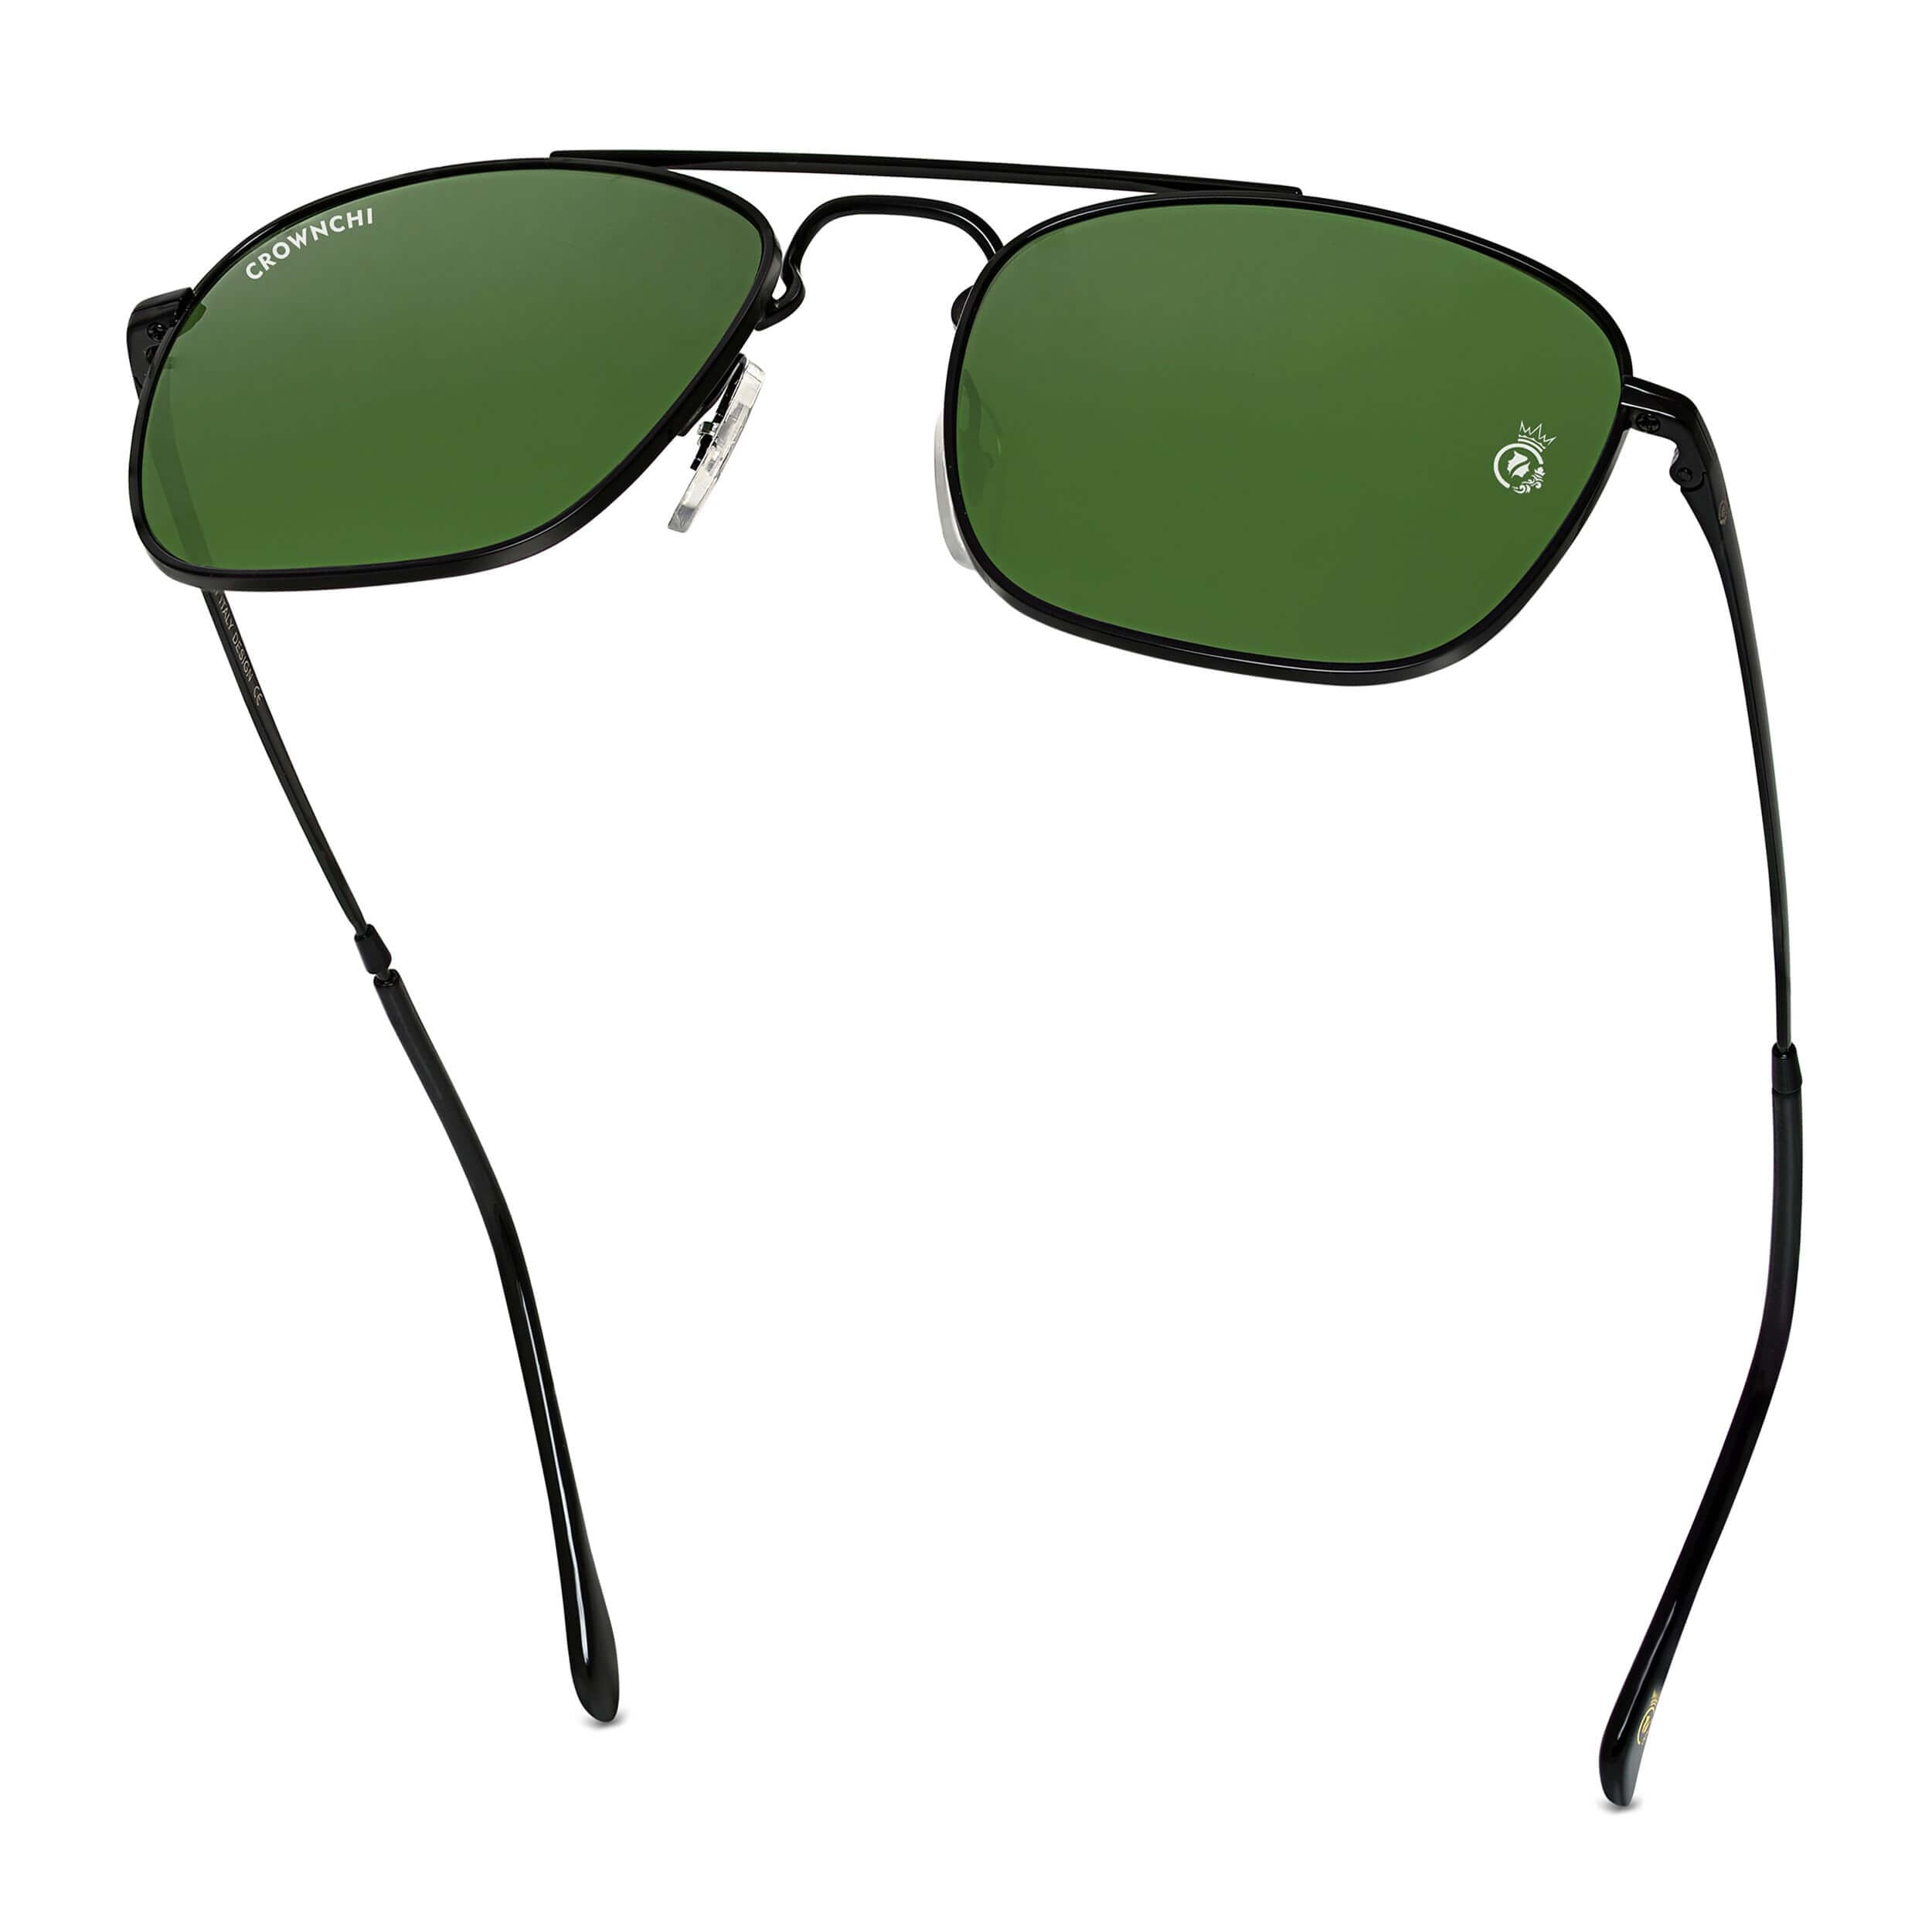 Denver Black Green Square Edition Sunglasses